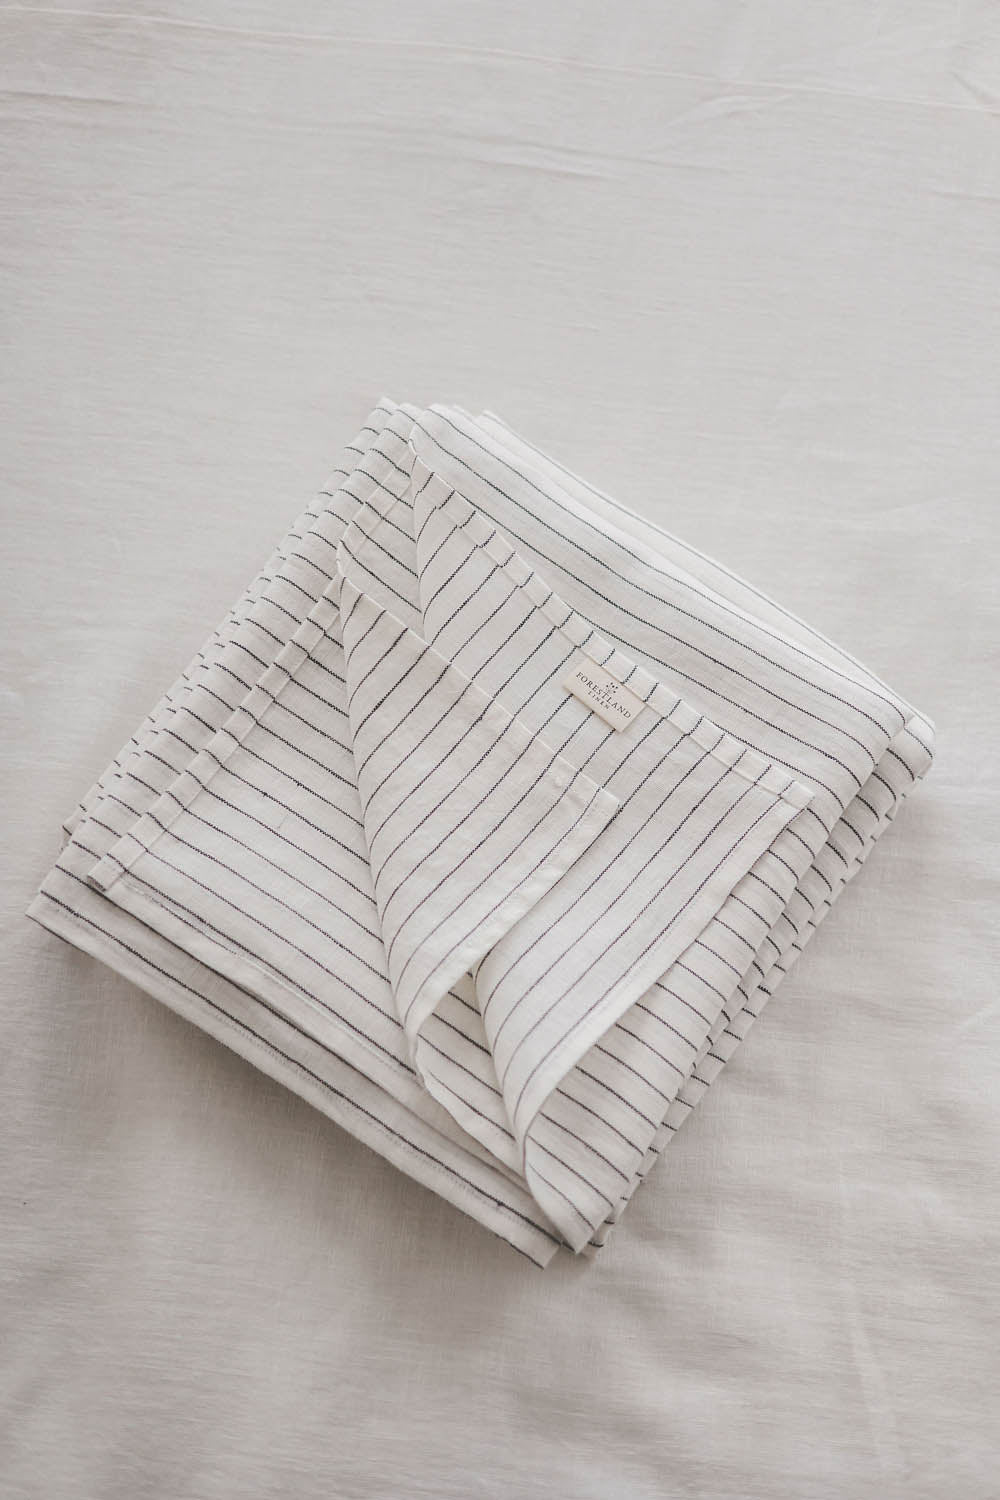 White linen flat sheet with black stripes